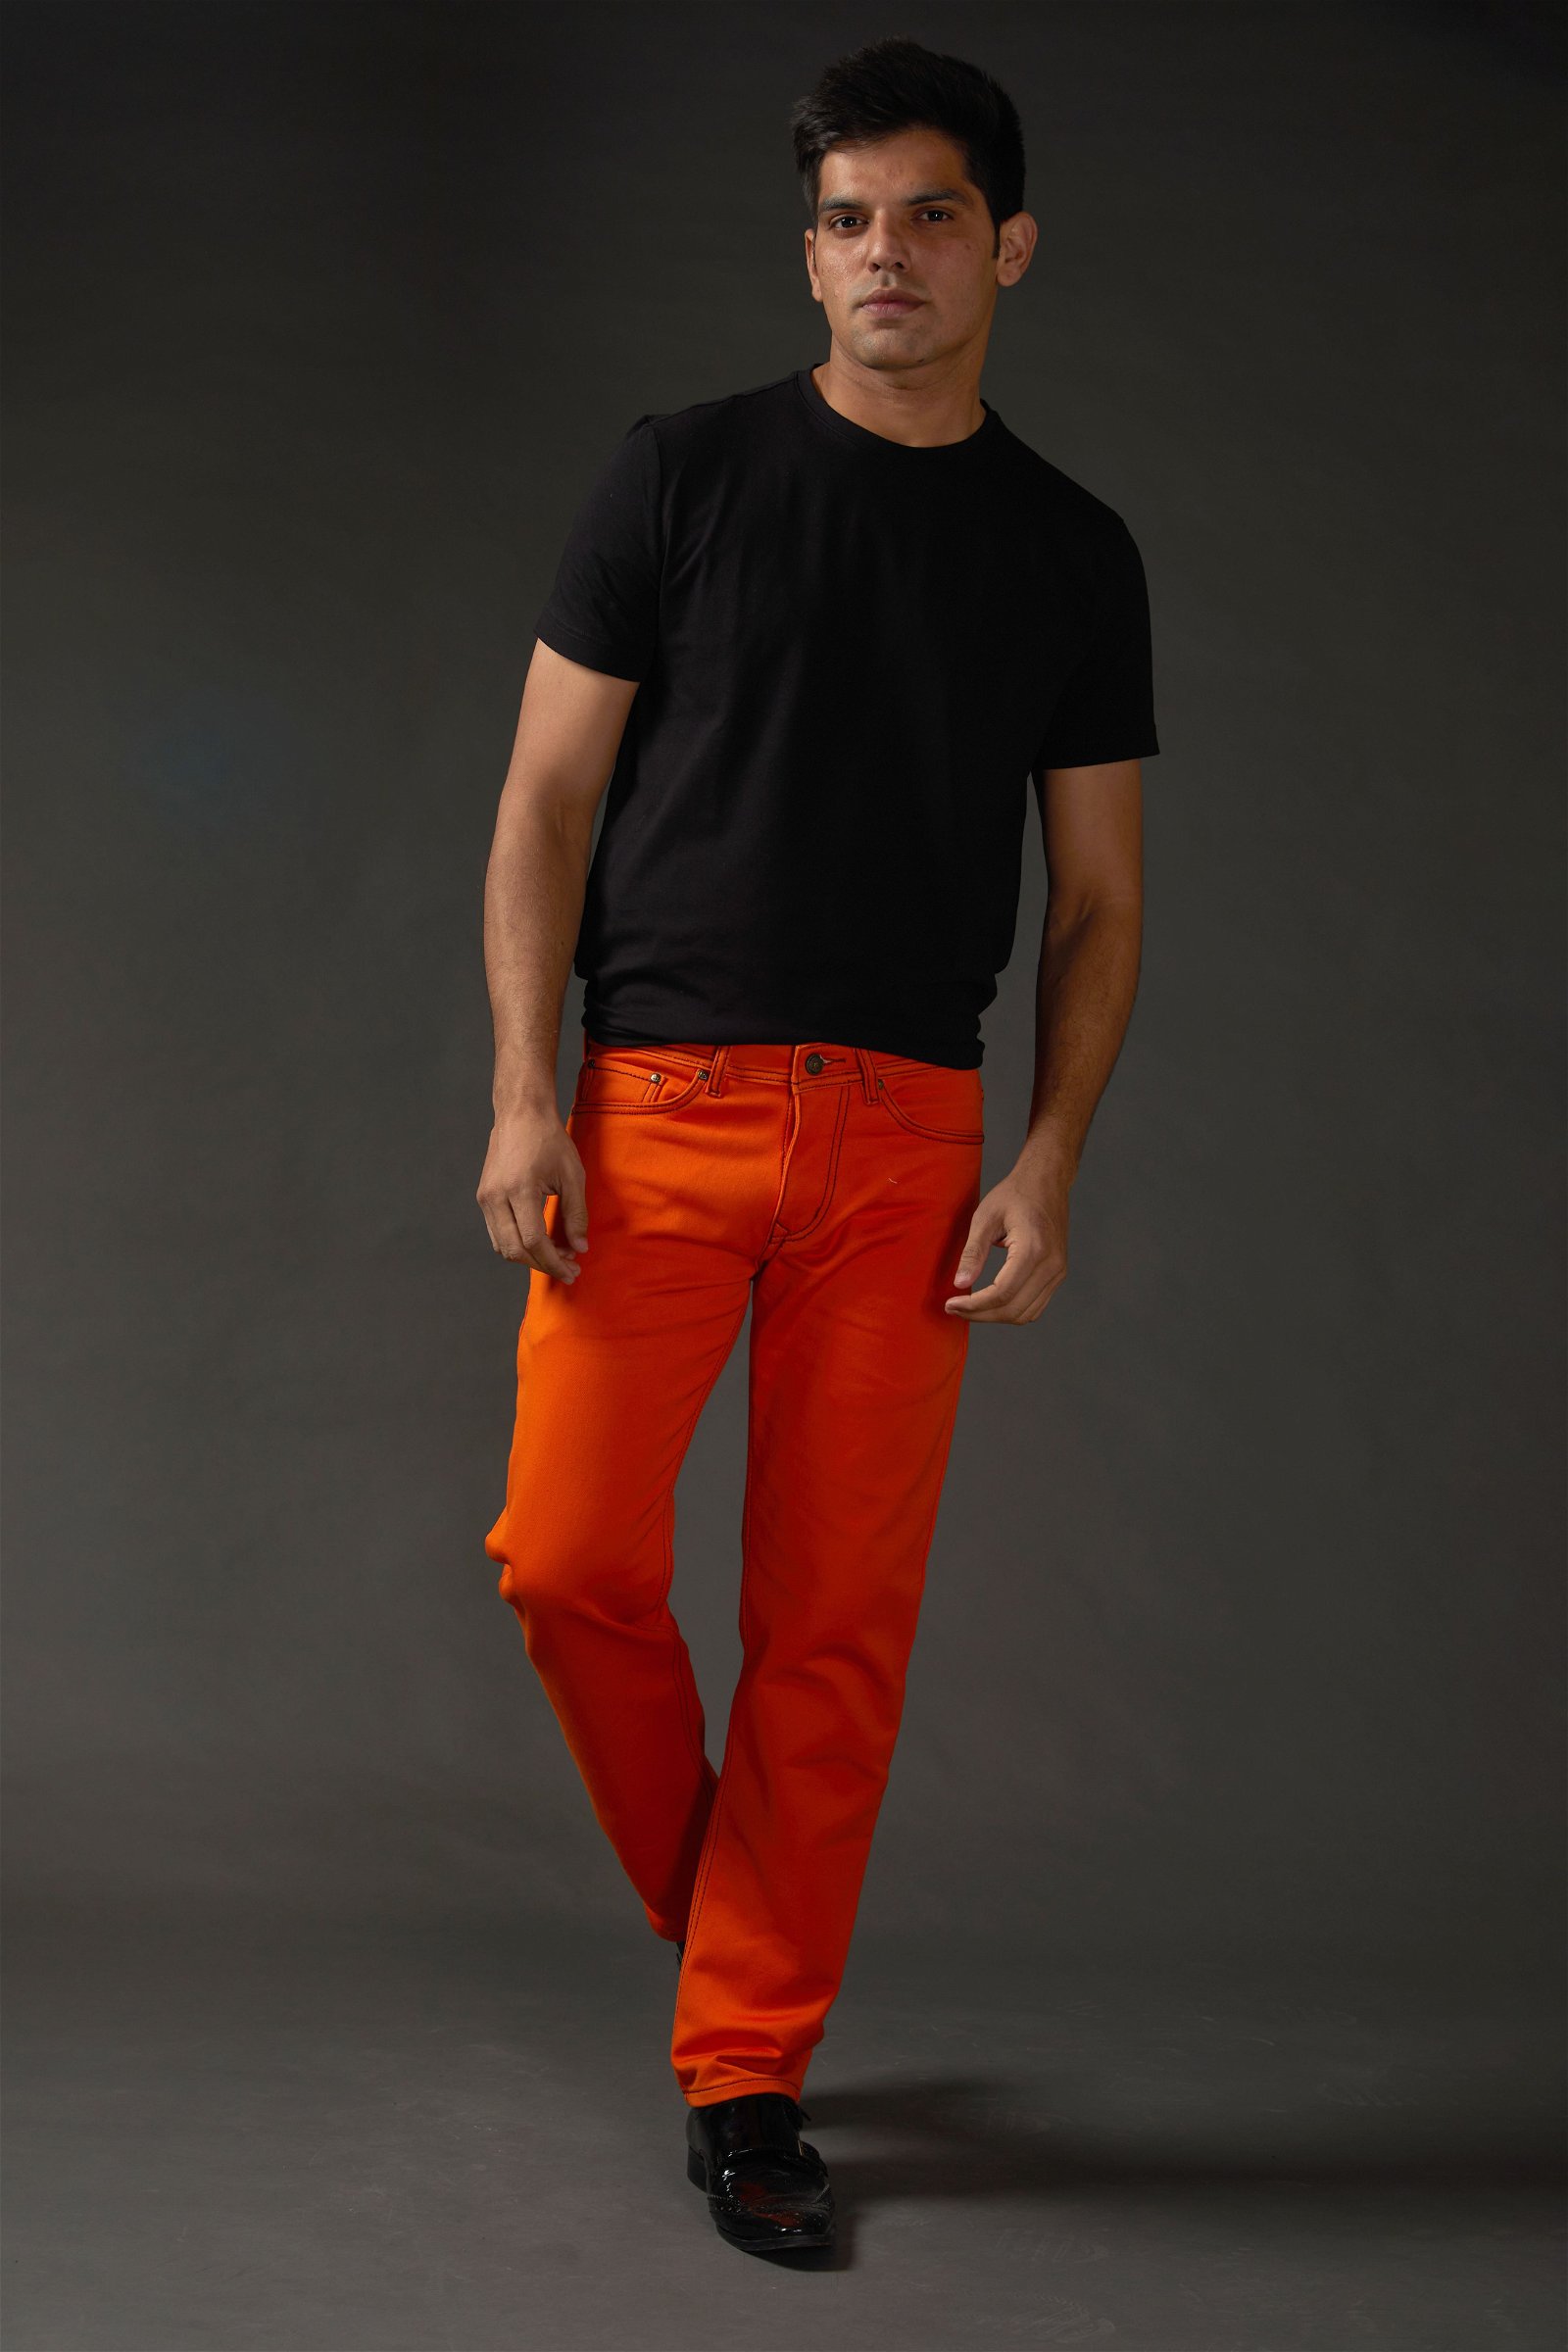 Men's Arc Flash Multi-Hazard Orange Hi Vis Trousers